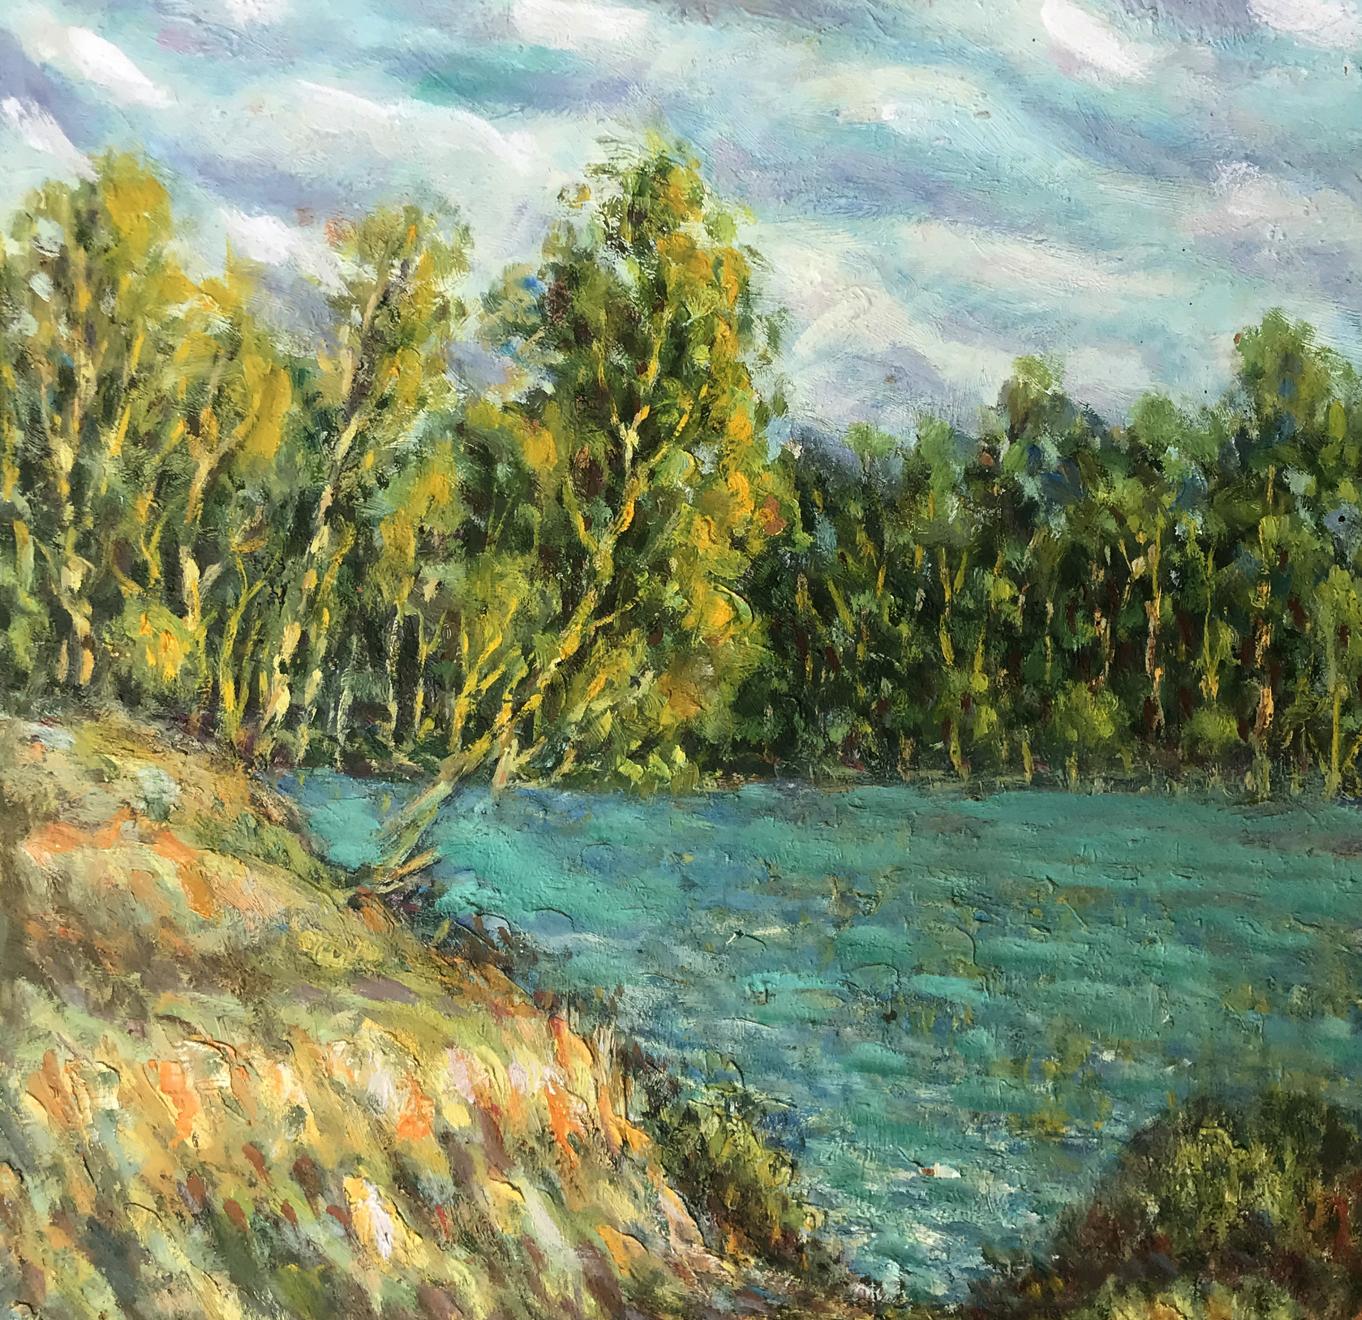 Oil Painting River Landscape Buy